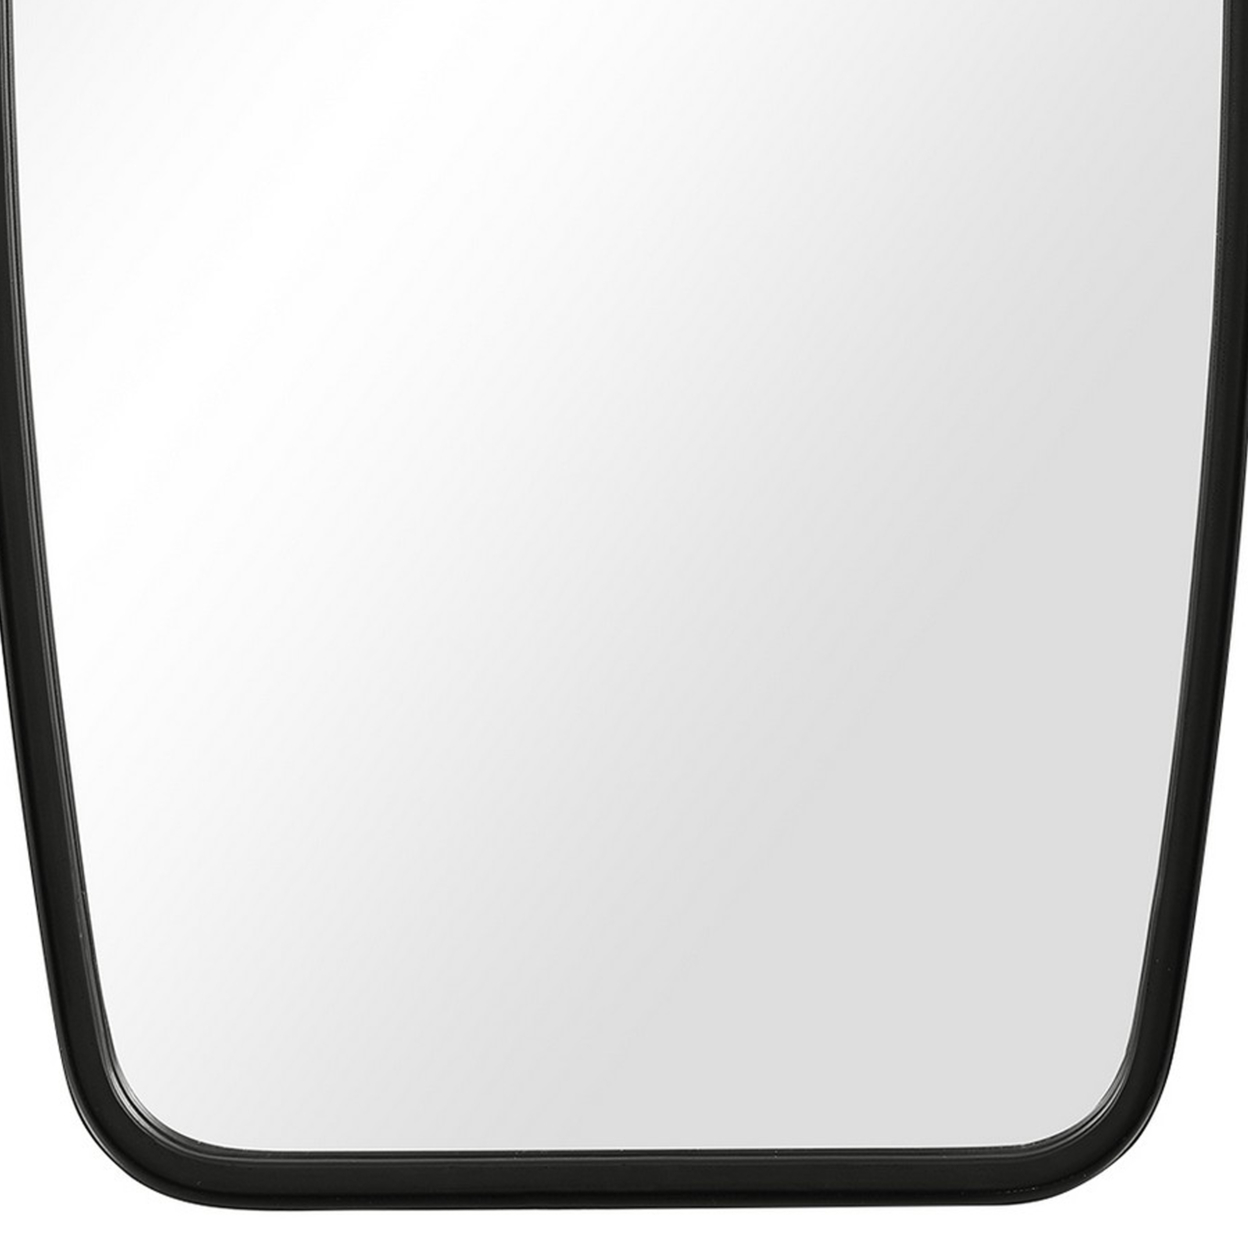 Rectangular Metal Frame Mirror With Curved Edges, Black- Saltoro Sherpi